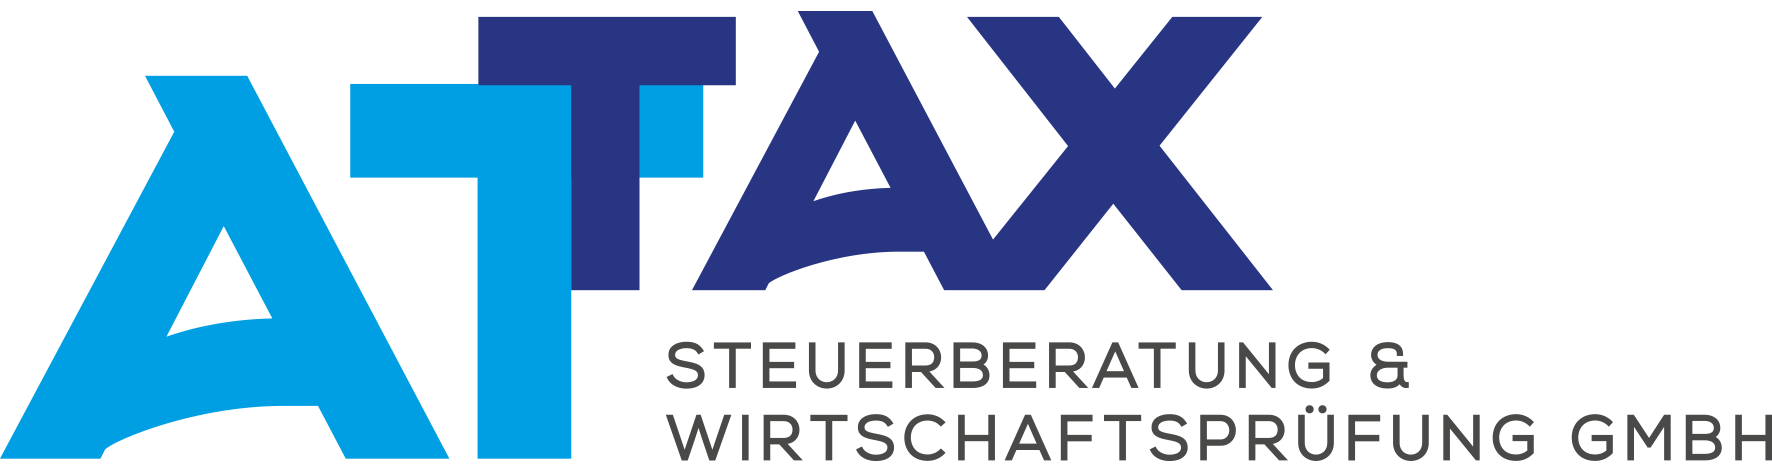 ATTAX - Austrian TAX & AUDIT Steuerberatung & Wirtschaftsprüfung GmbH